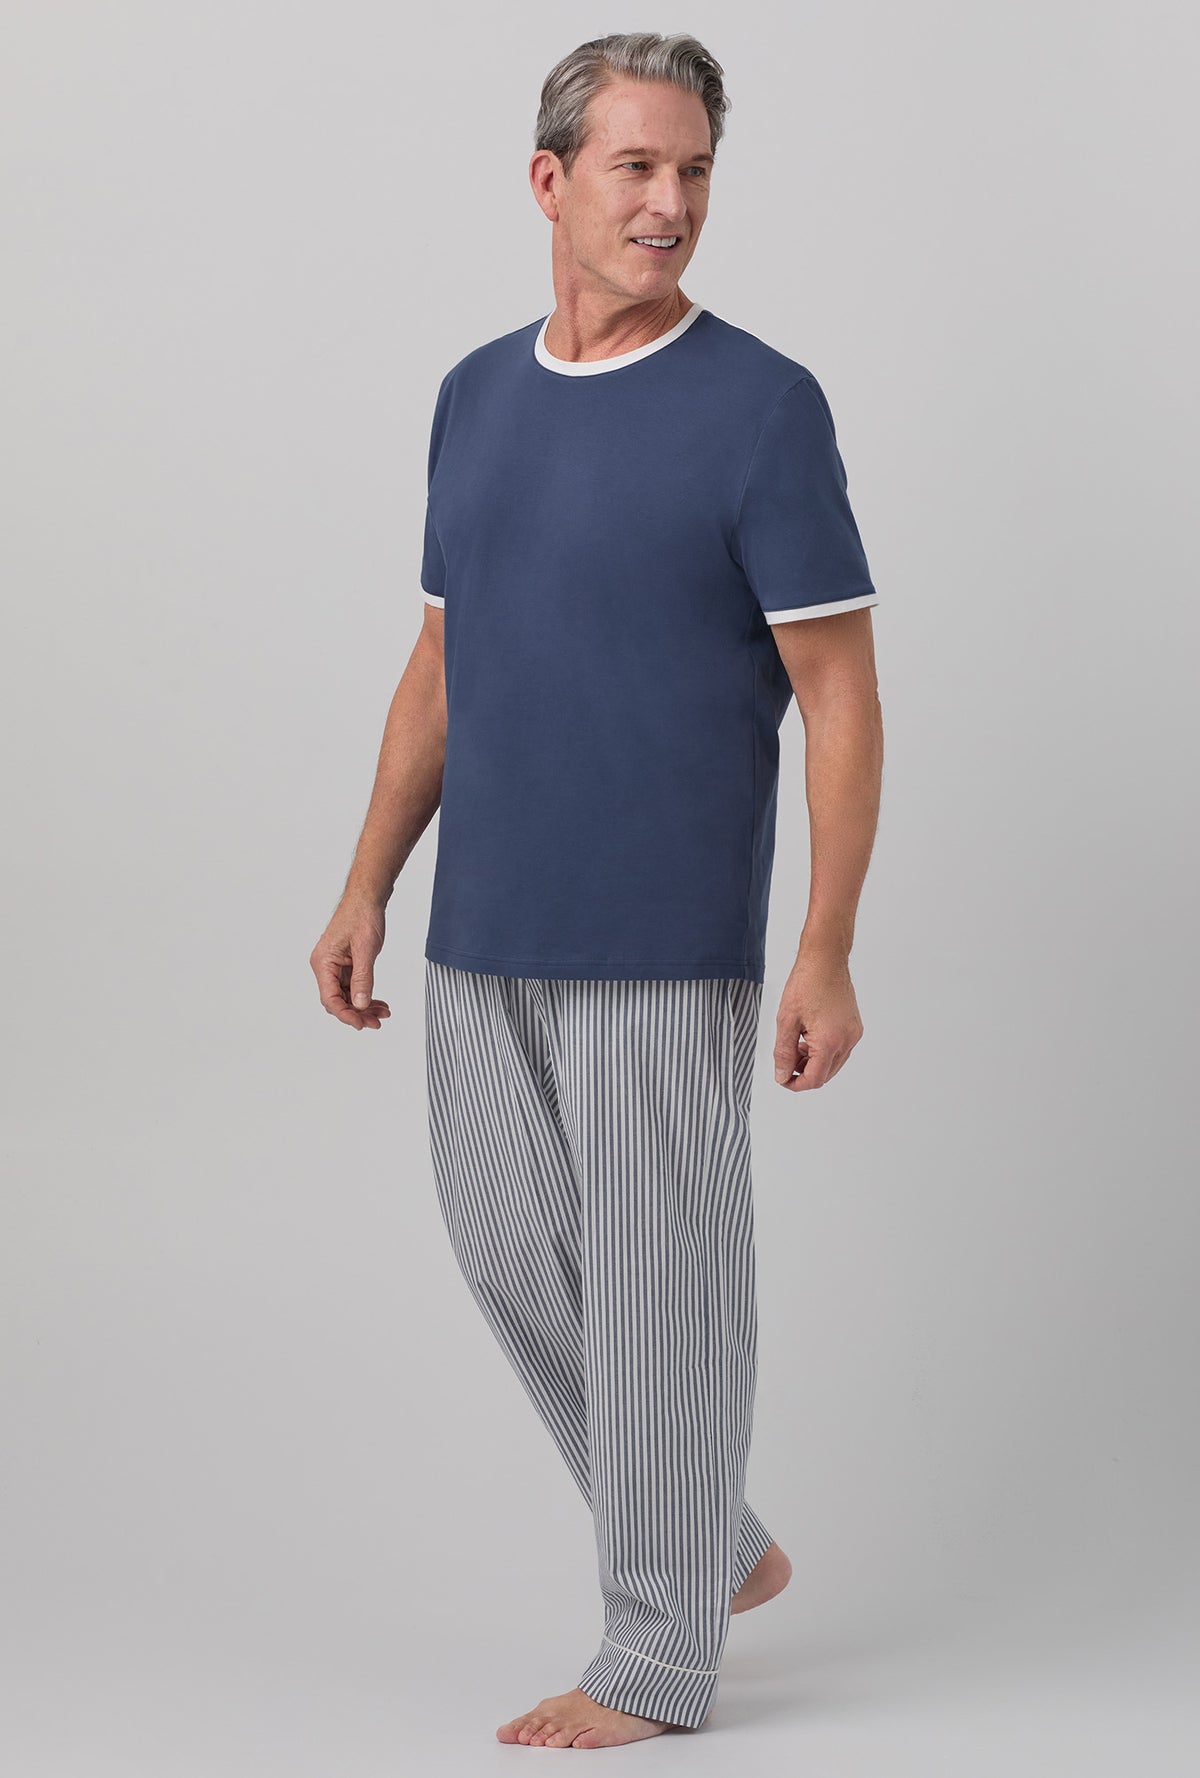 A man wearing blue short sleeve tee pj set with blue south shore stripe print.